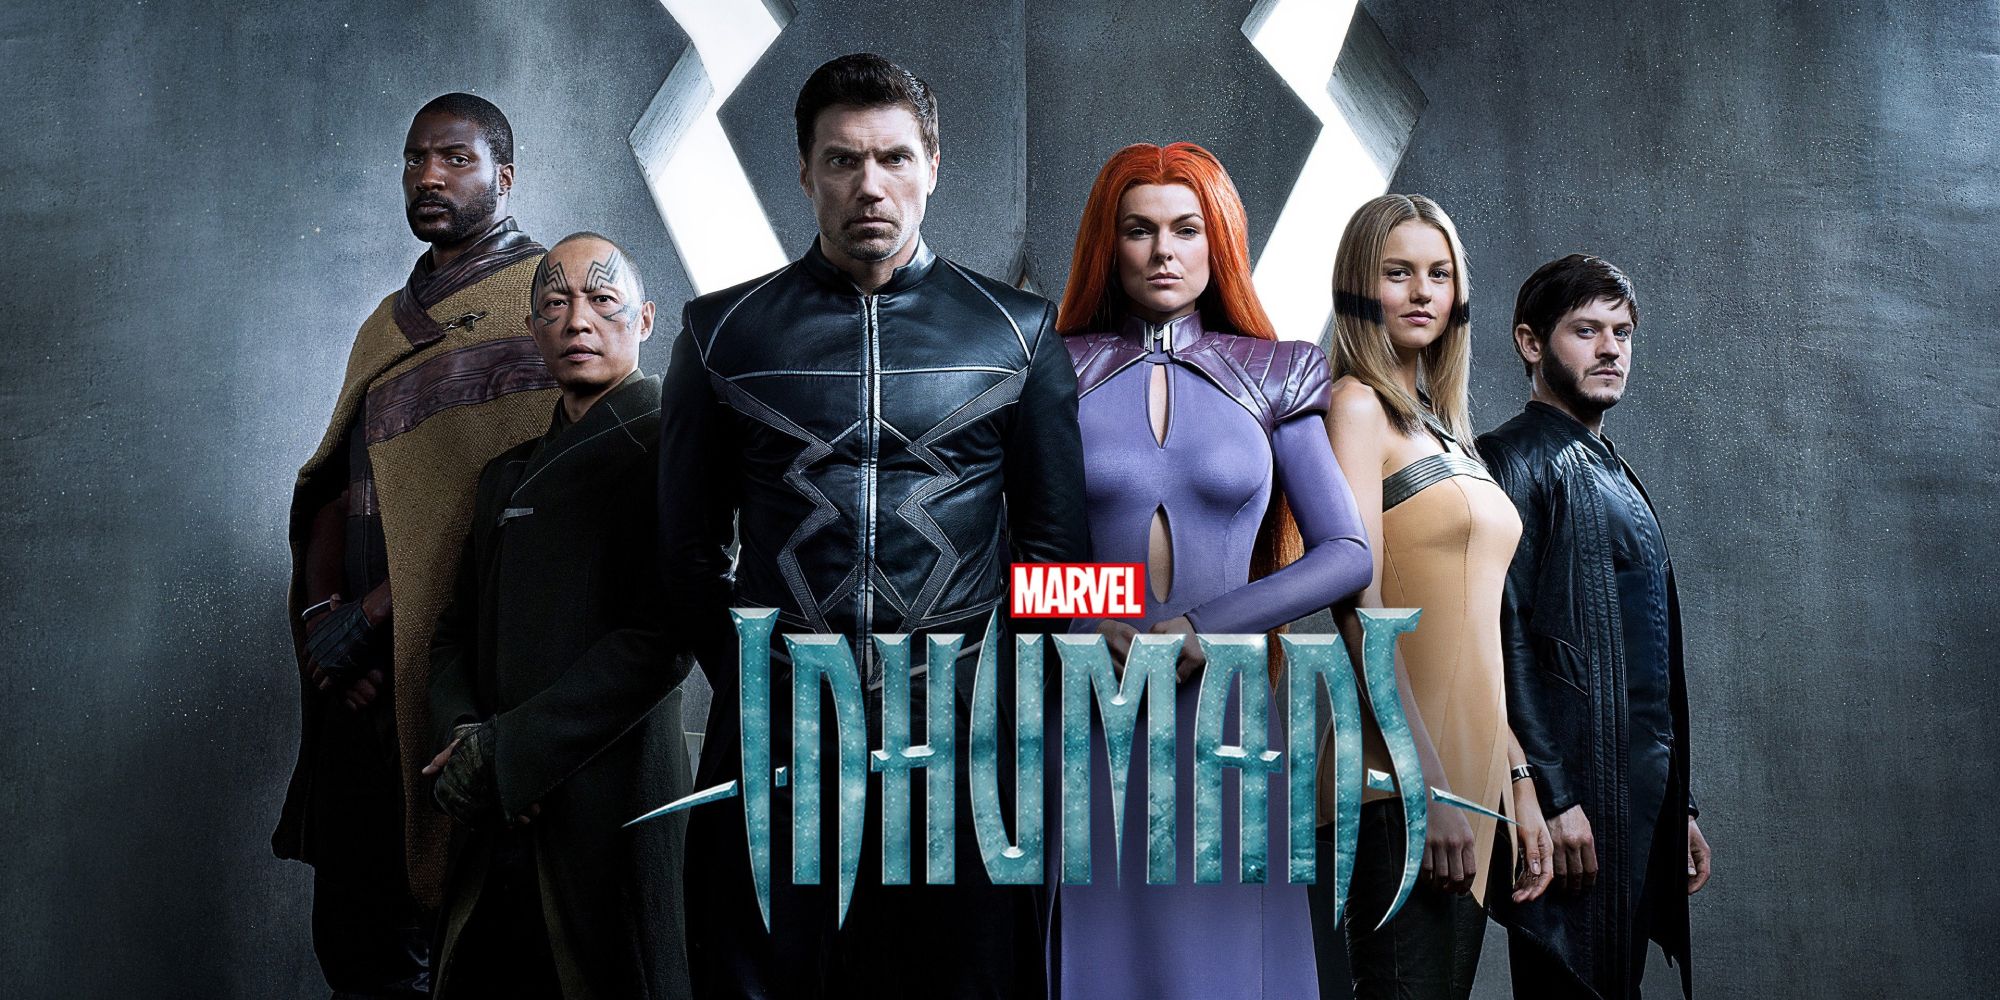 Promotional image for Marvel's Inhumans